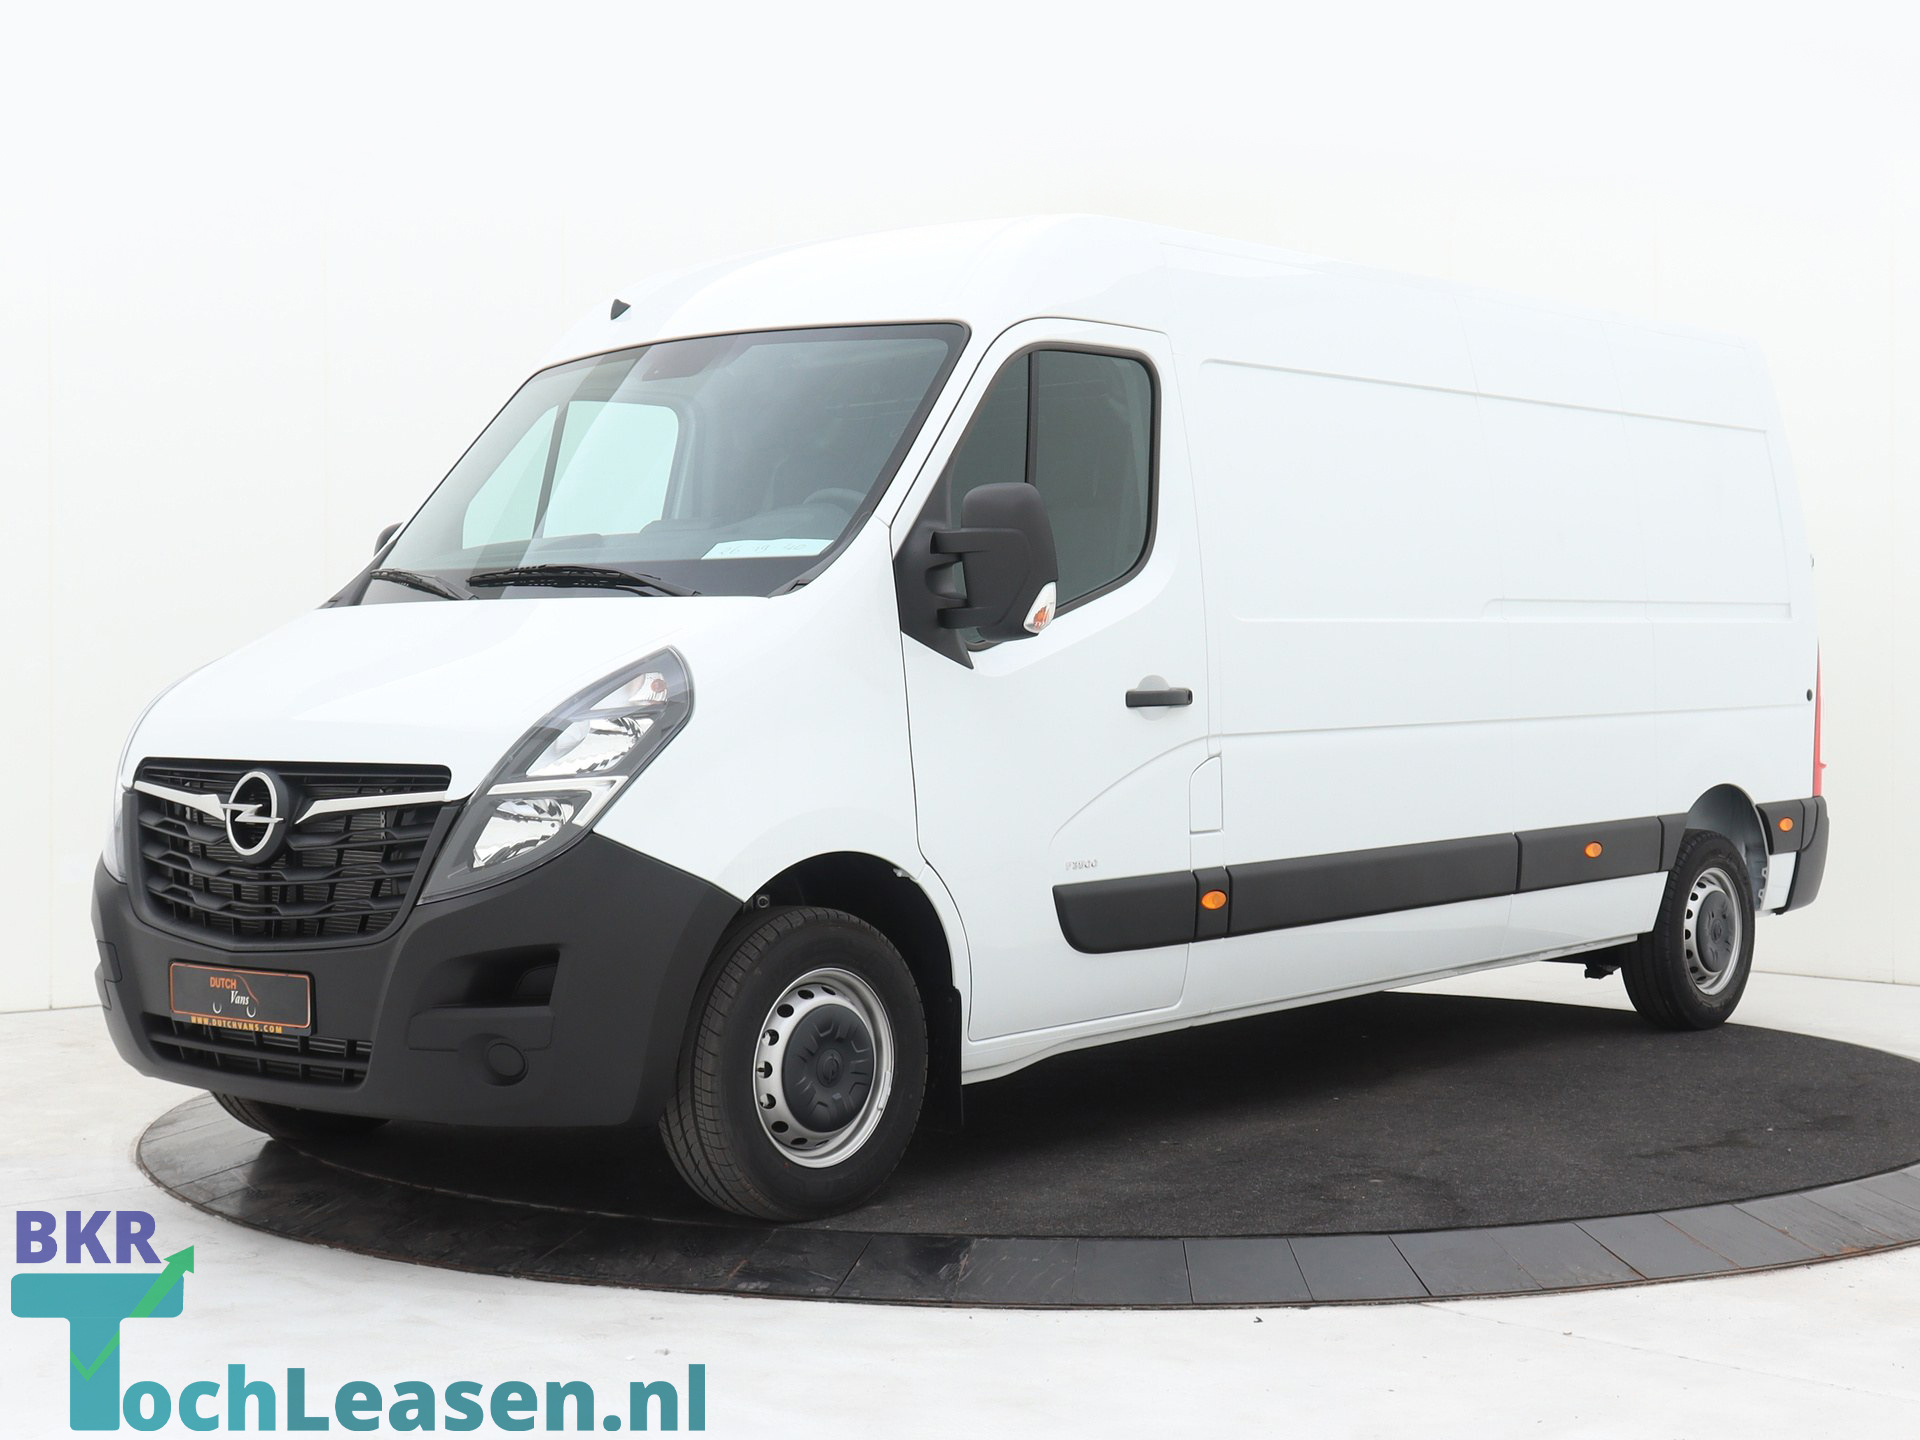 BKRTochLeasen.nl - Opel Movano - L3H2 - wit 18